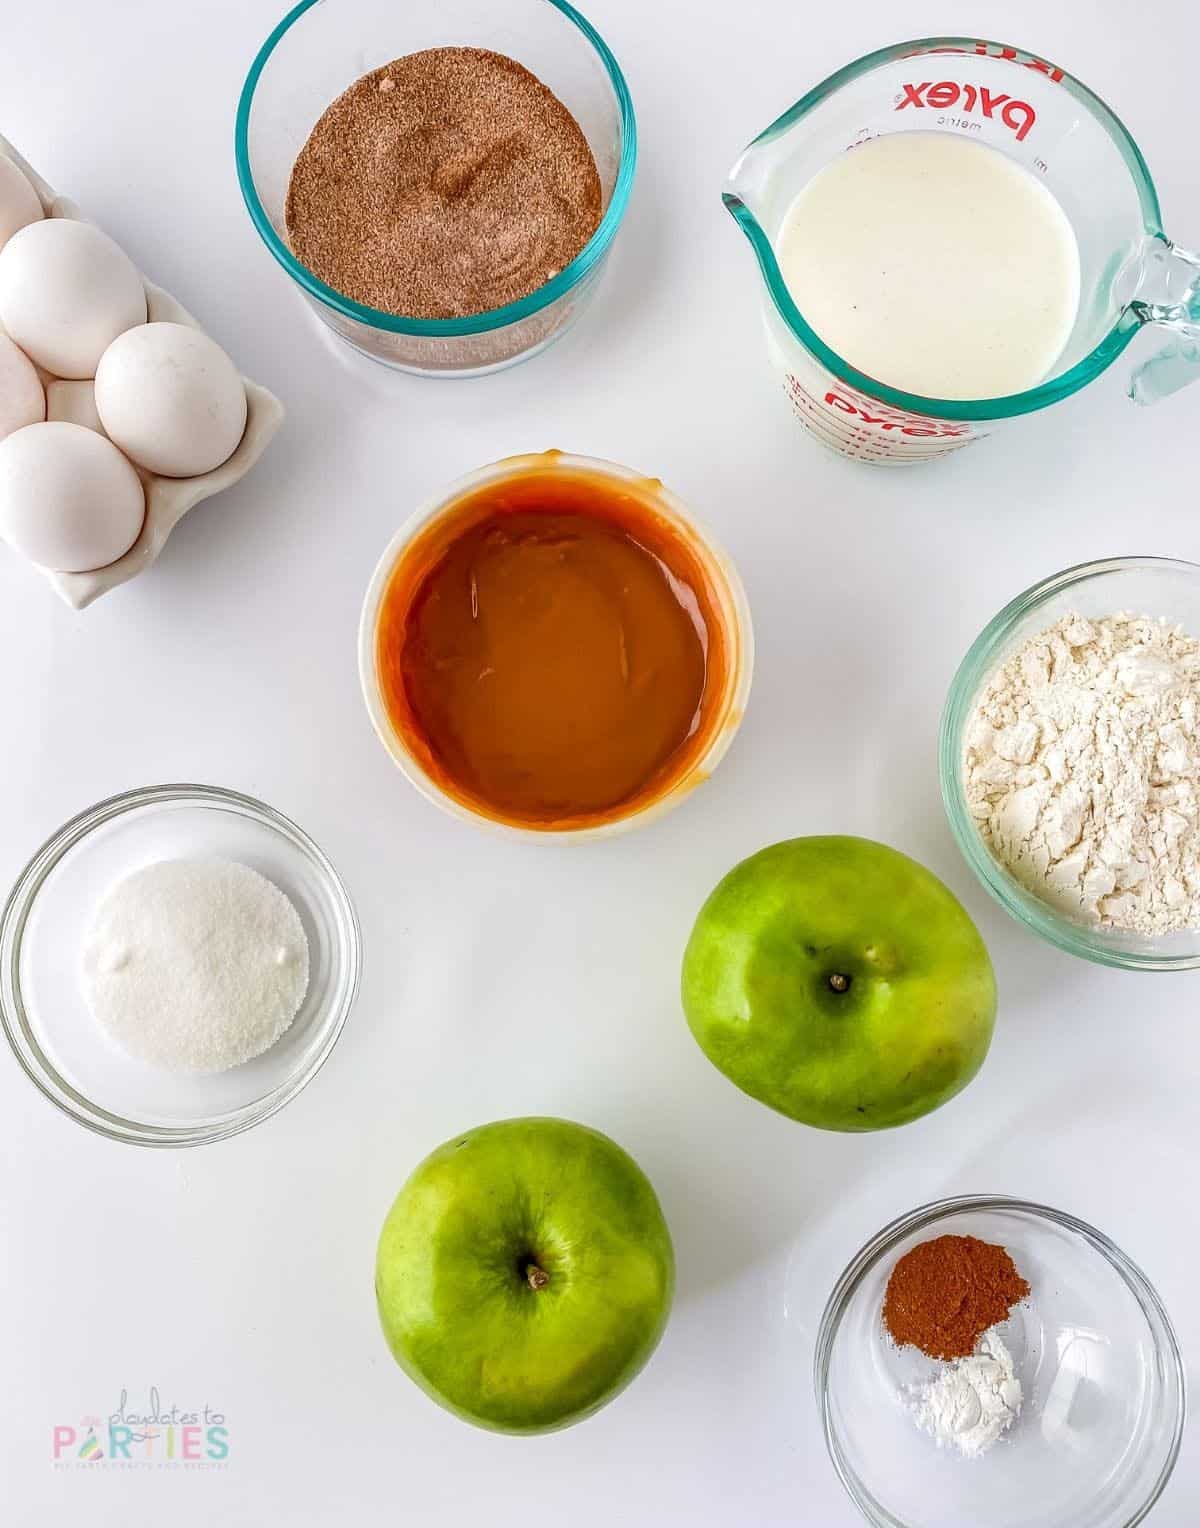 Ingredients for caramel apple rings.